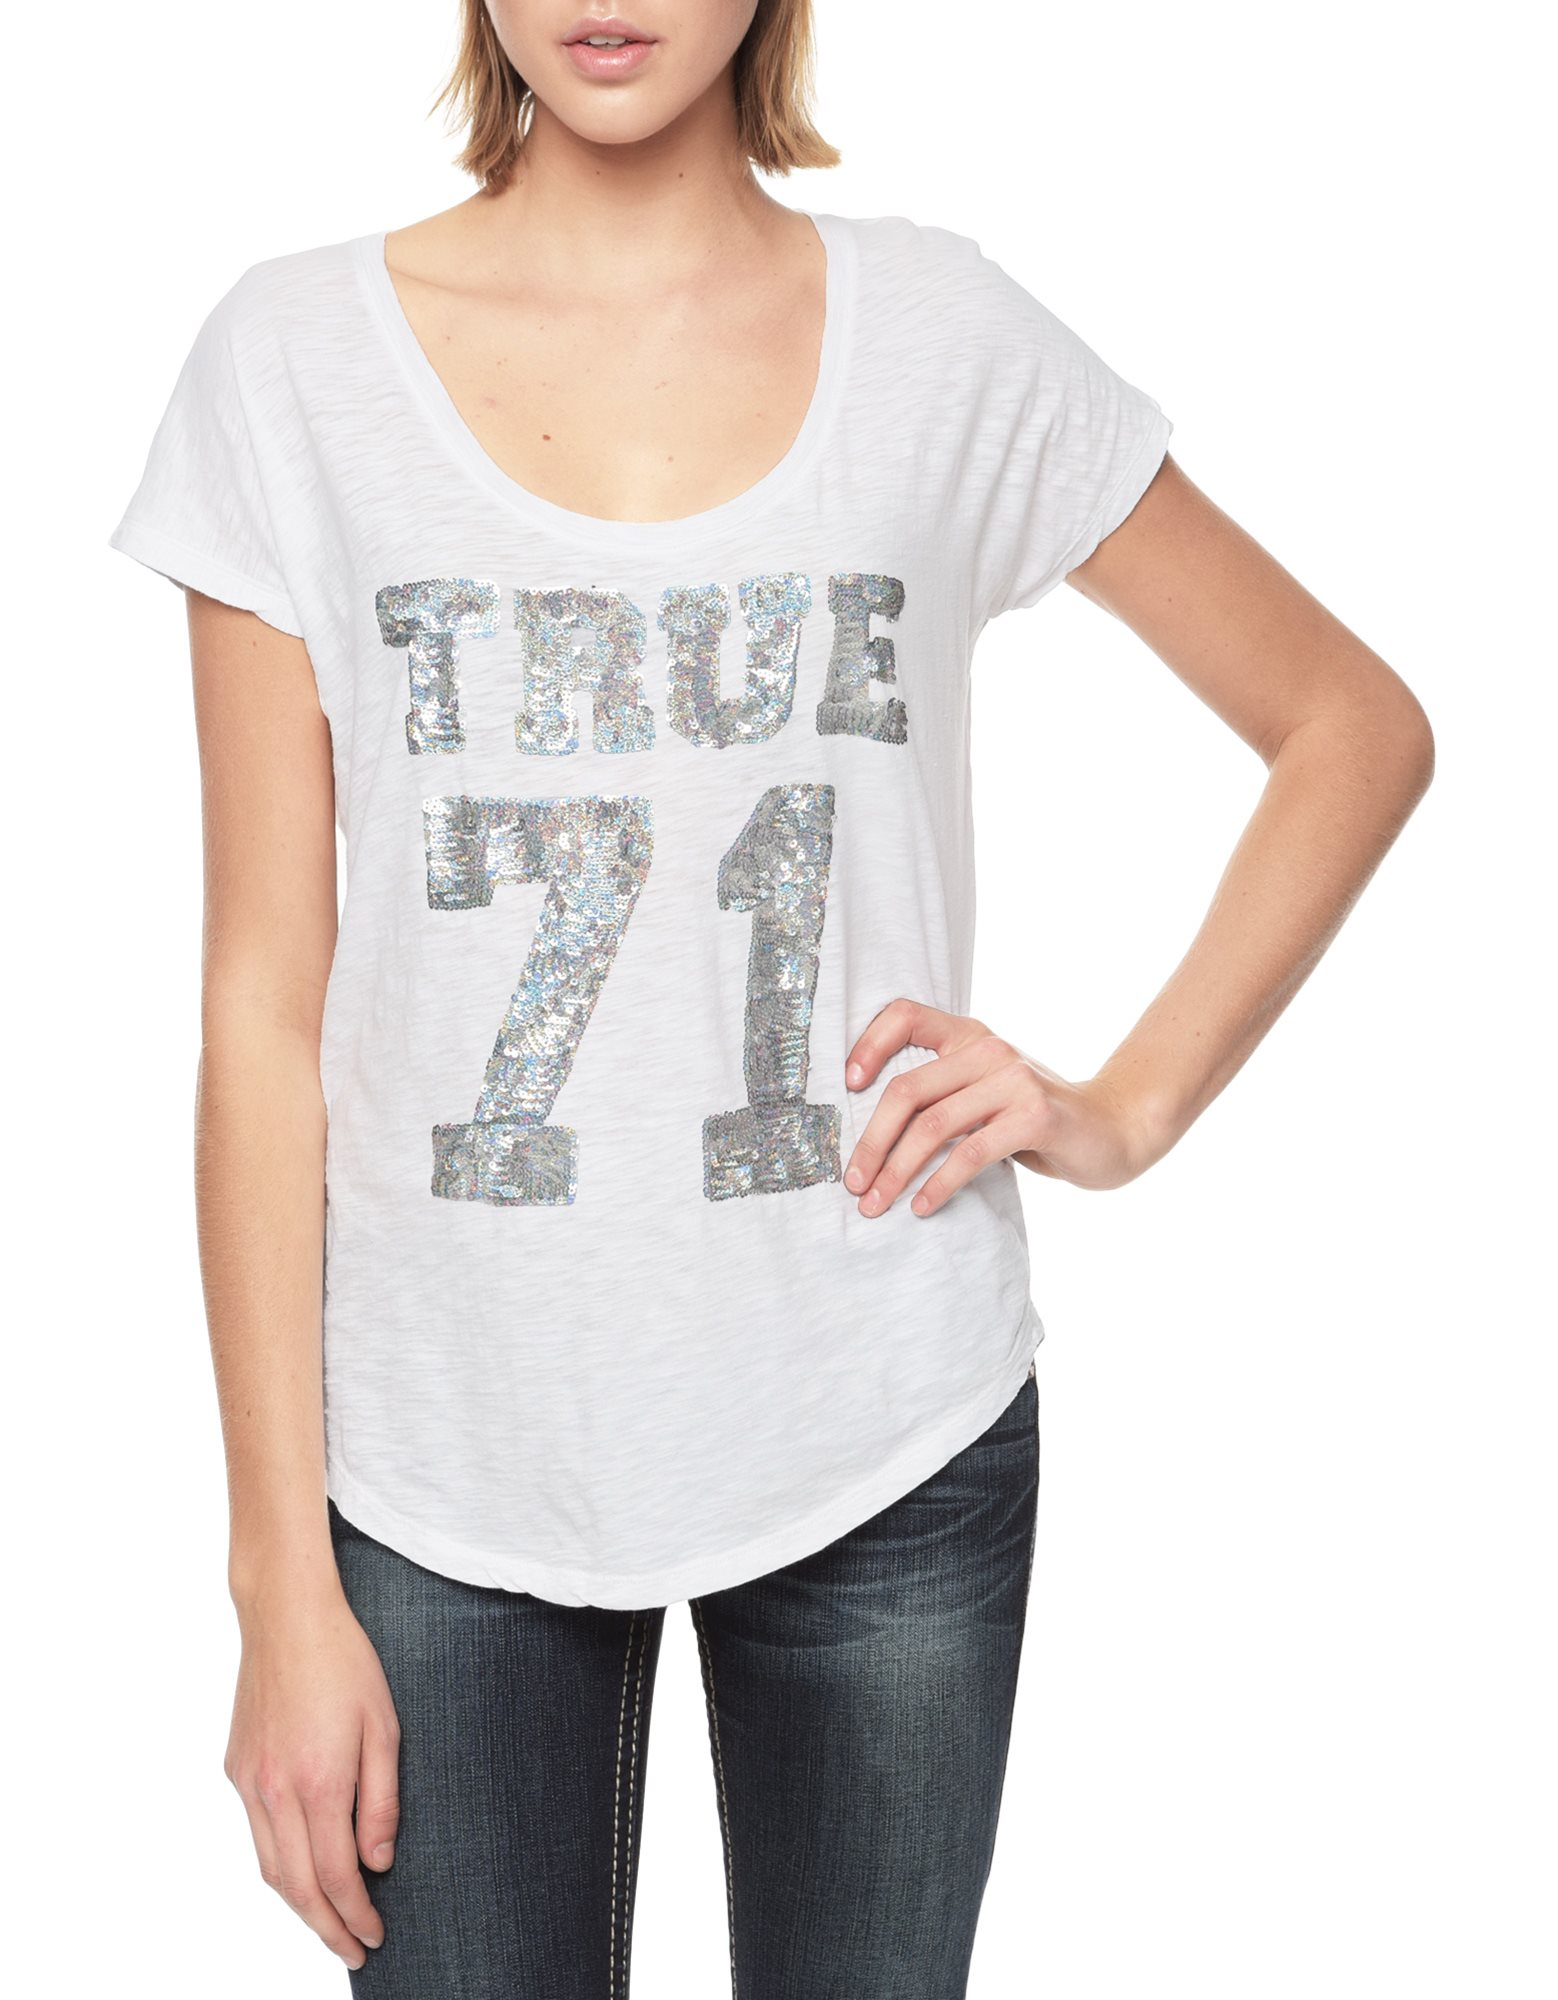 True religion European True 71 Sequin Womens Relaxed T-Shirt in White